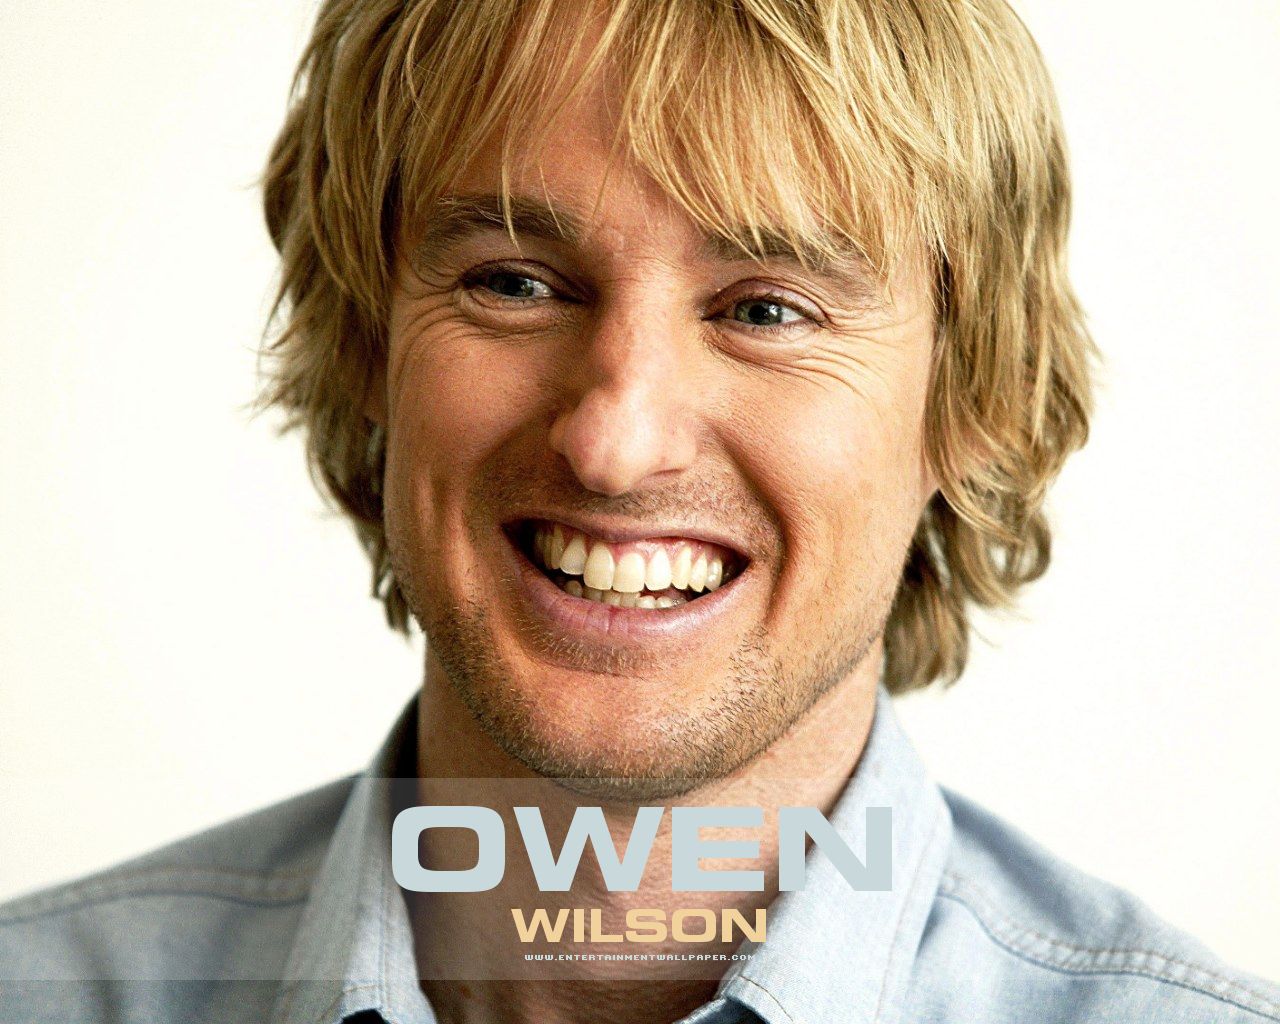 Owen Wilson Backgrounds on Wallpapers Vista